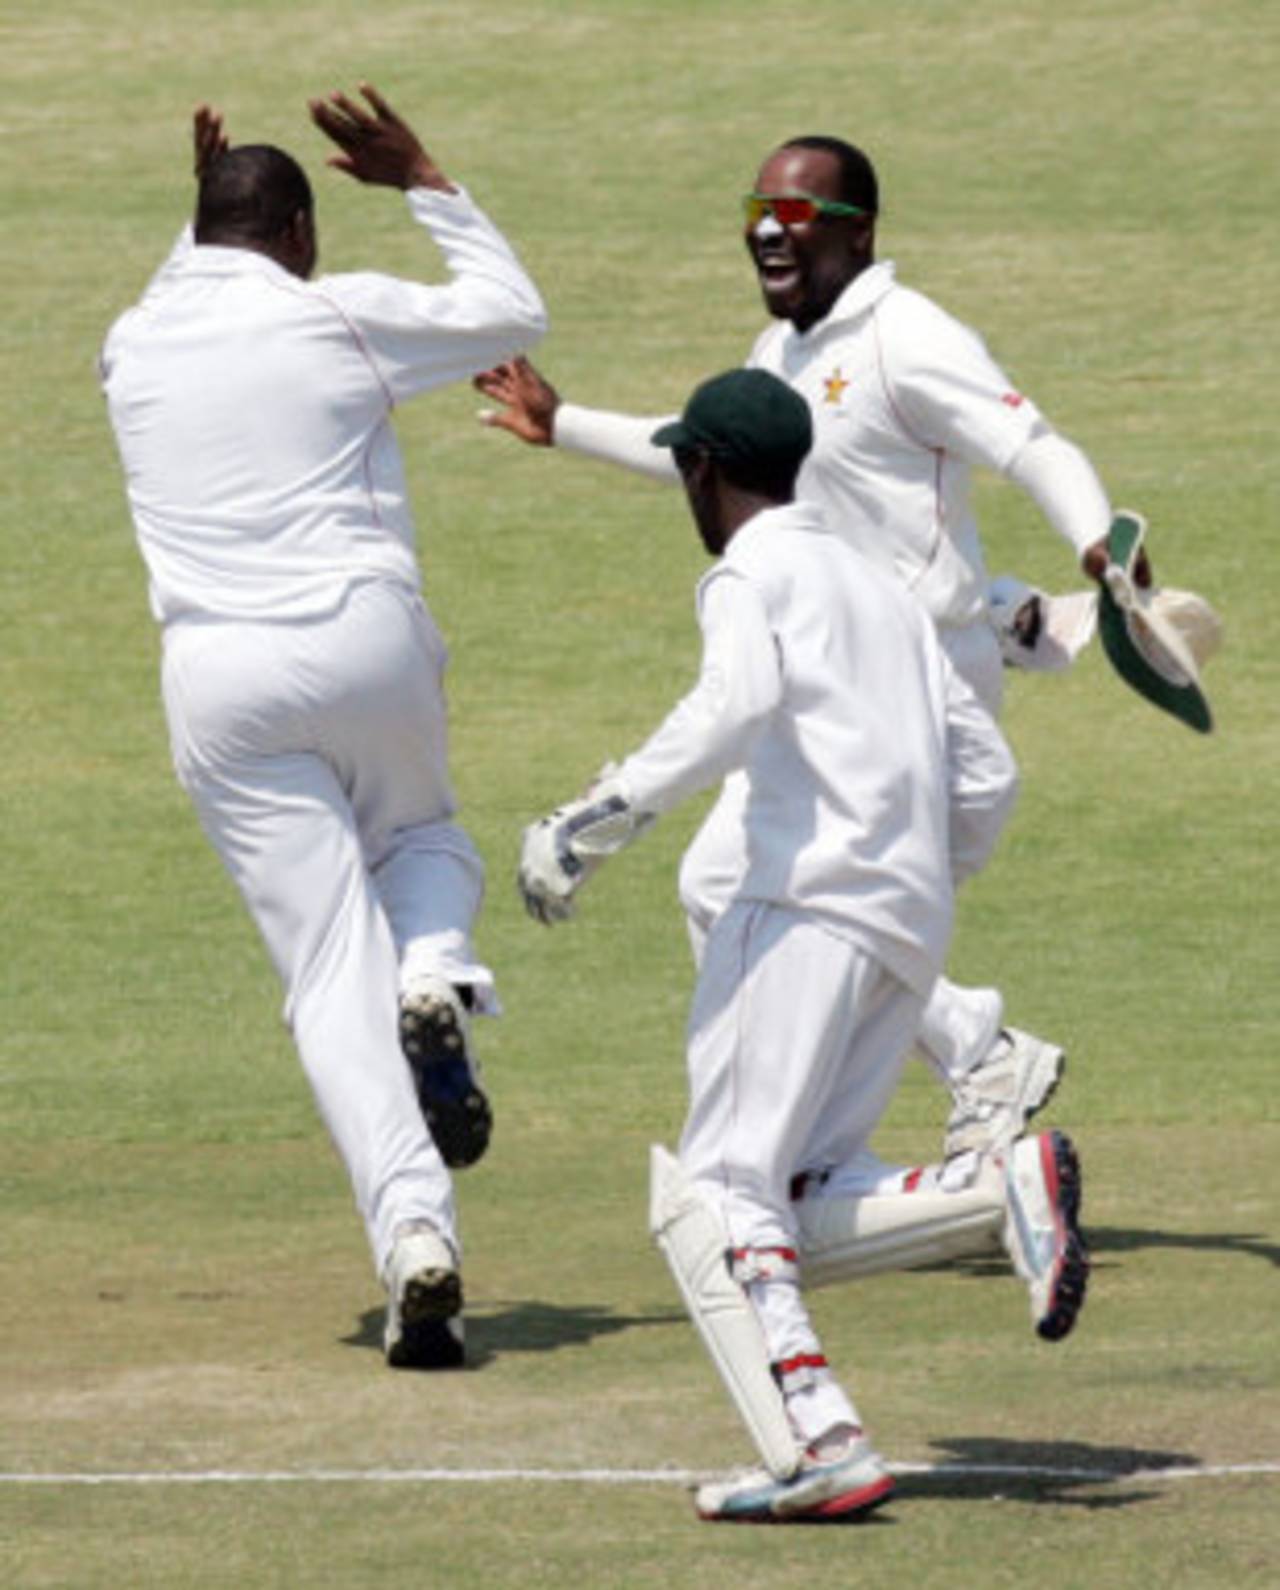 Hamilton Masakadza exults after a wicket, Zimbabwe v Pakistan, 2nd Test, Harare, 5th day, September 14, 2013